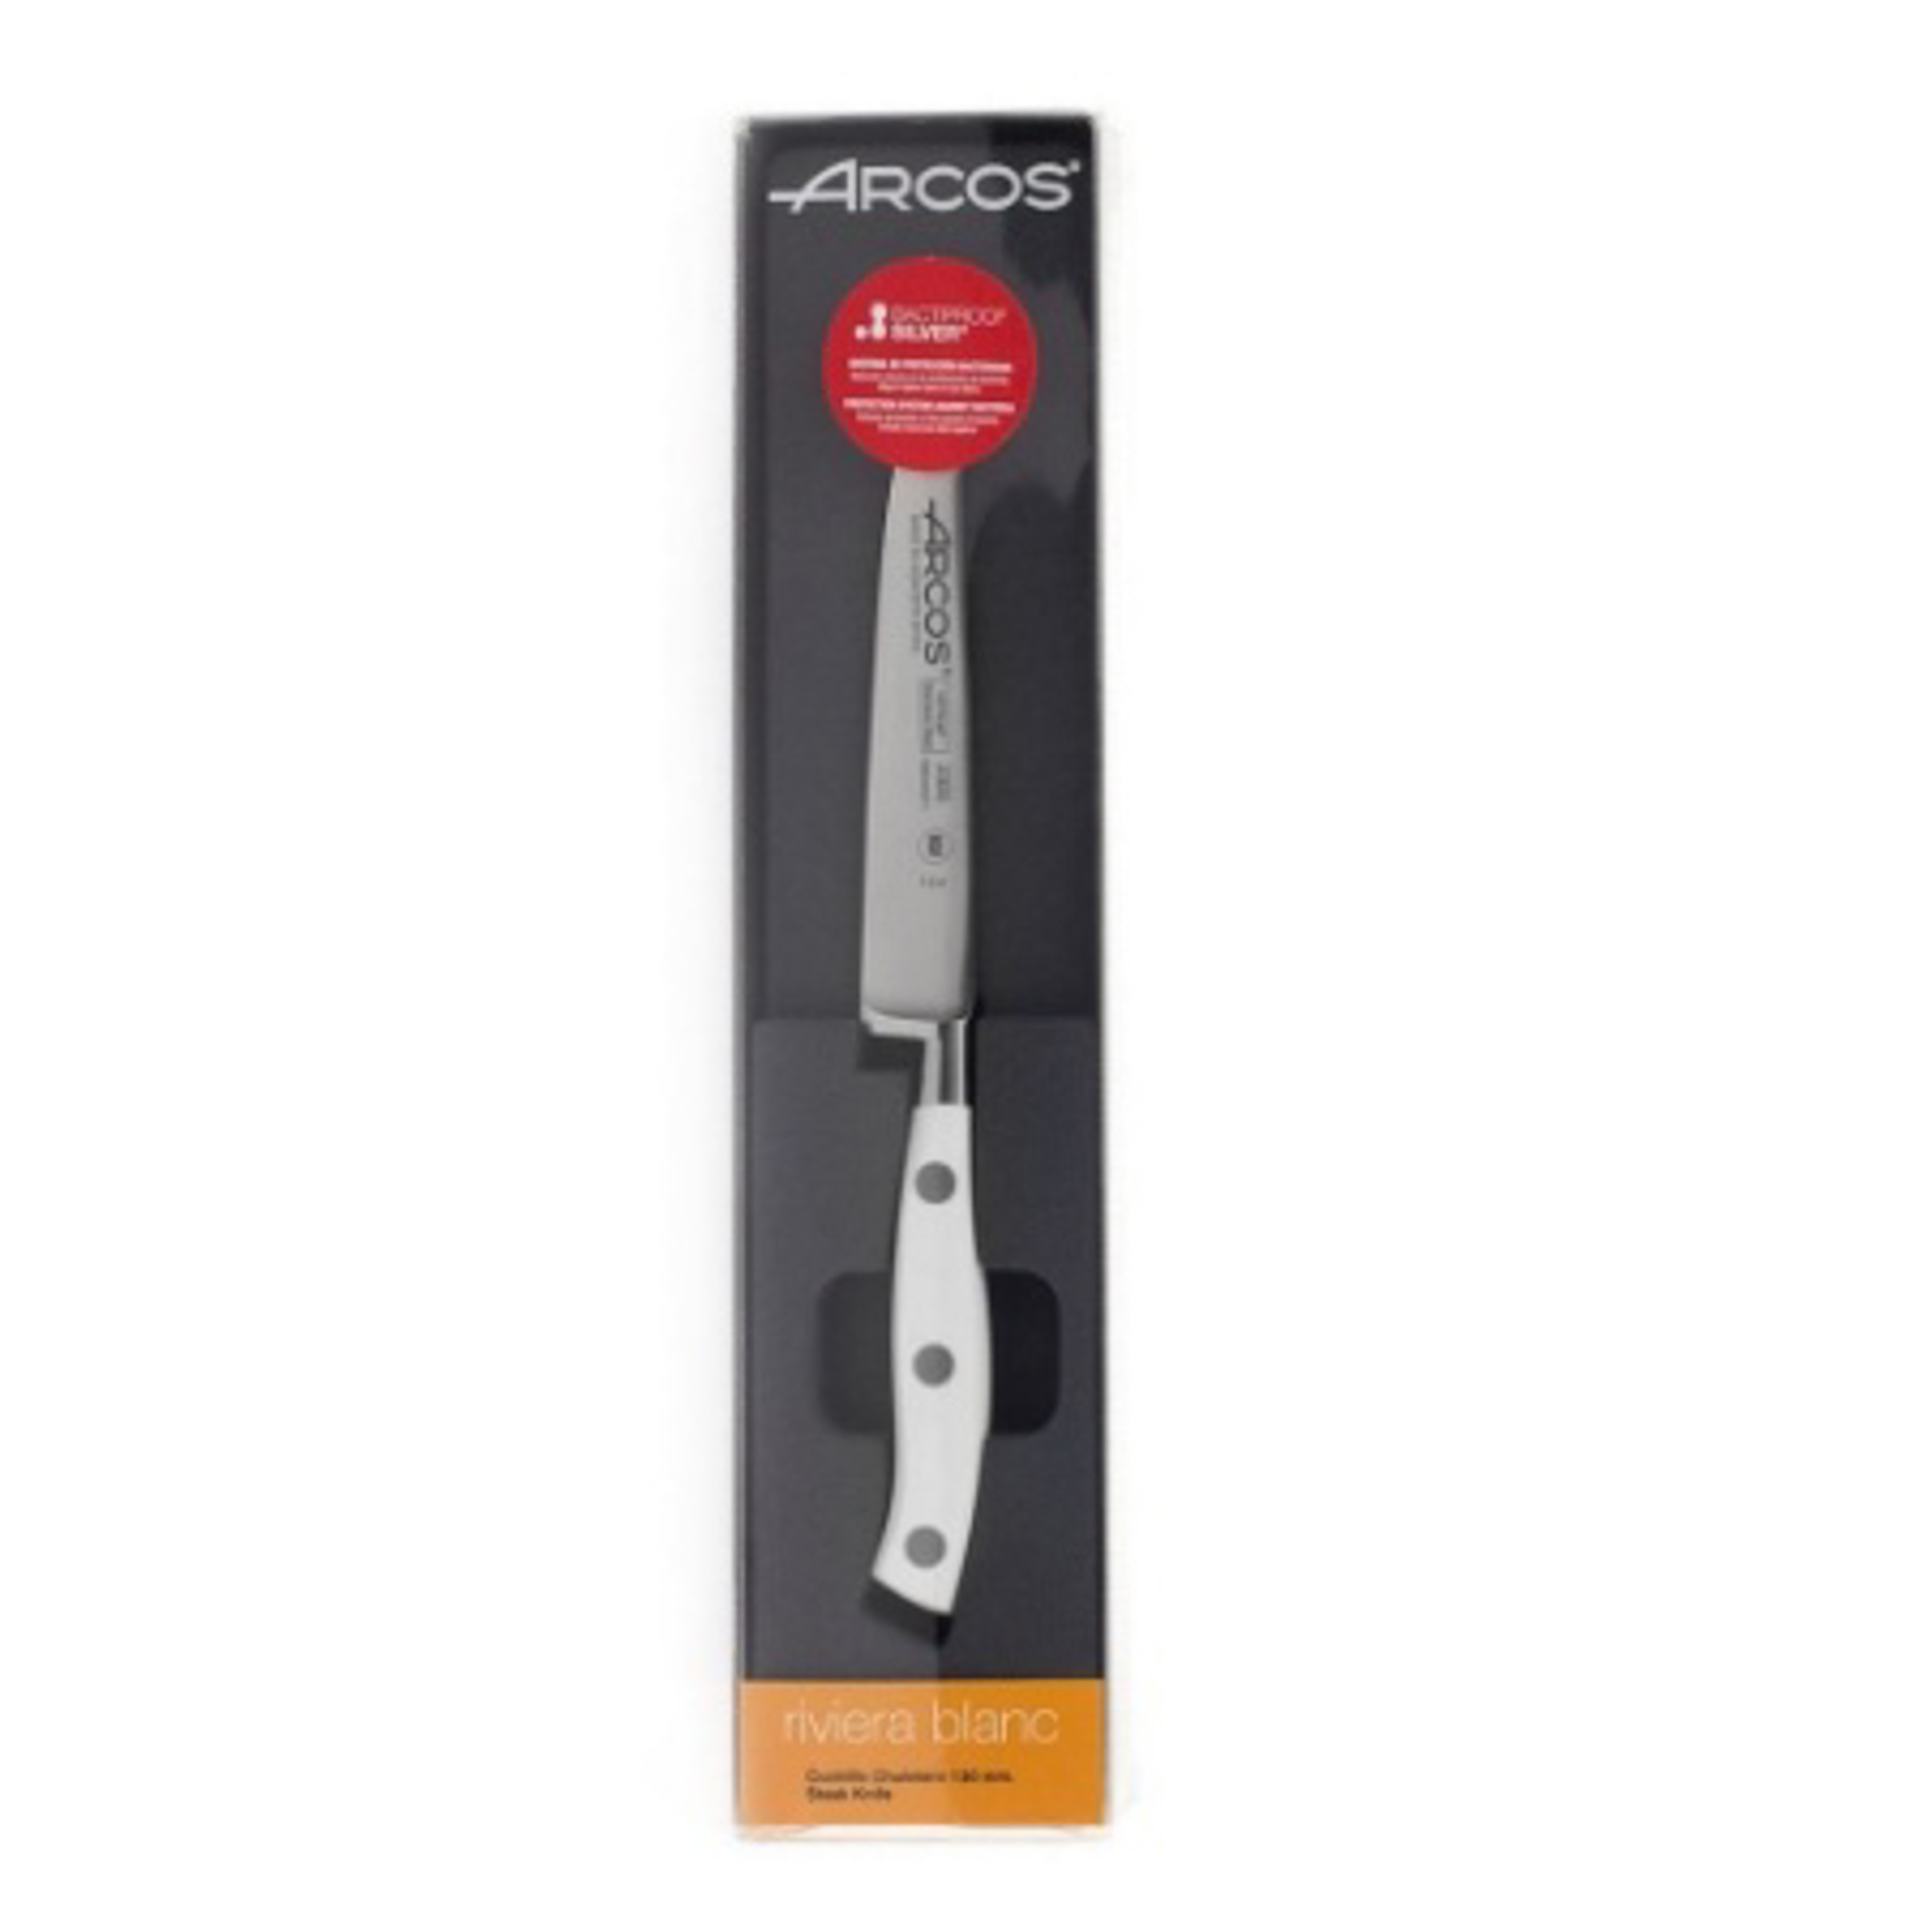 Нож для стейка 13 см riviera blanca Arcos - фото 2